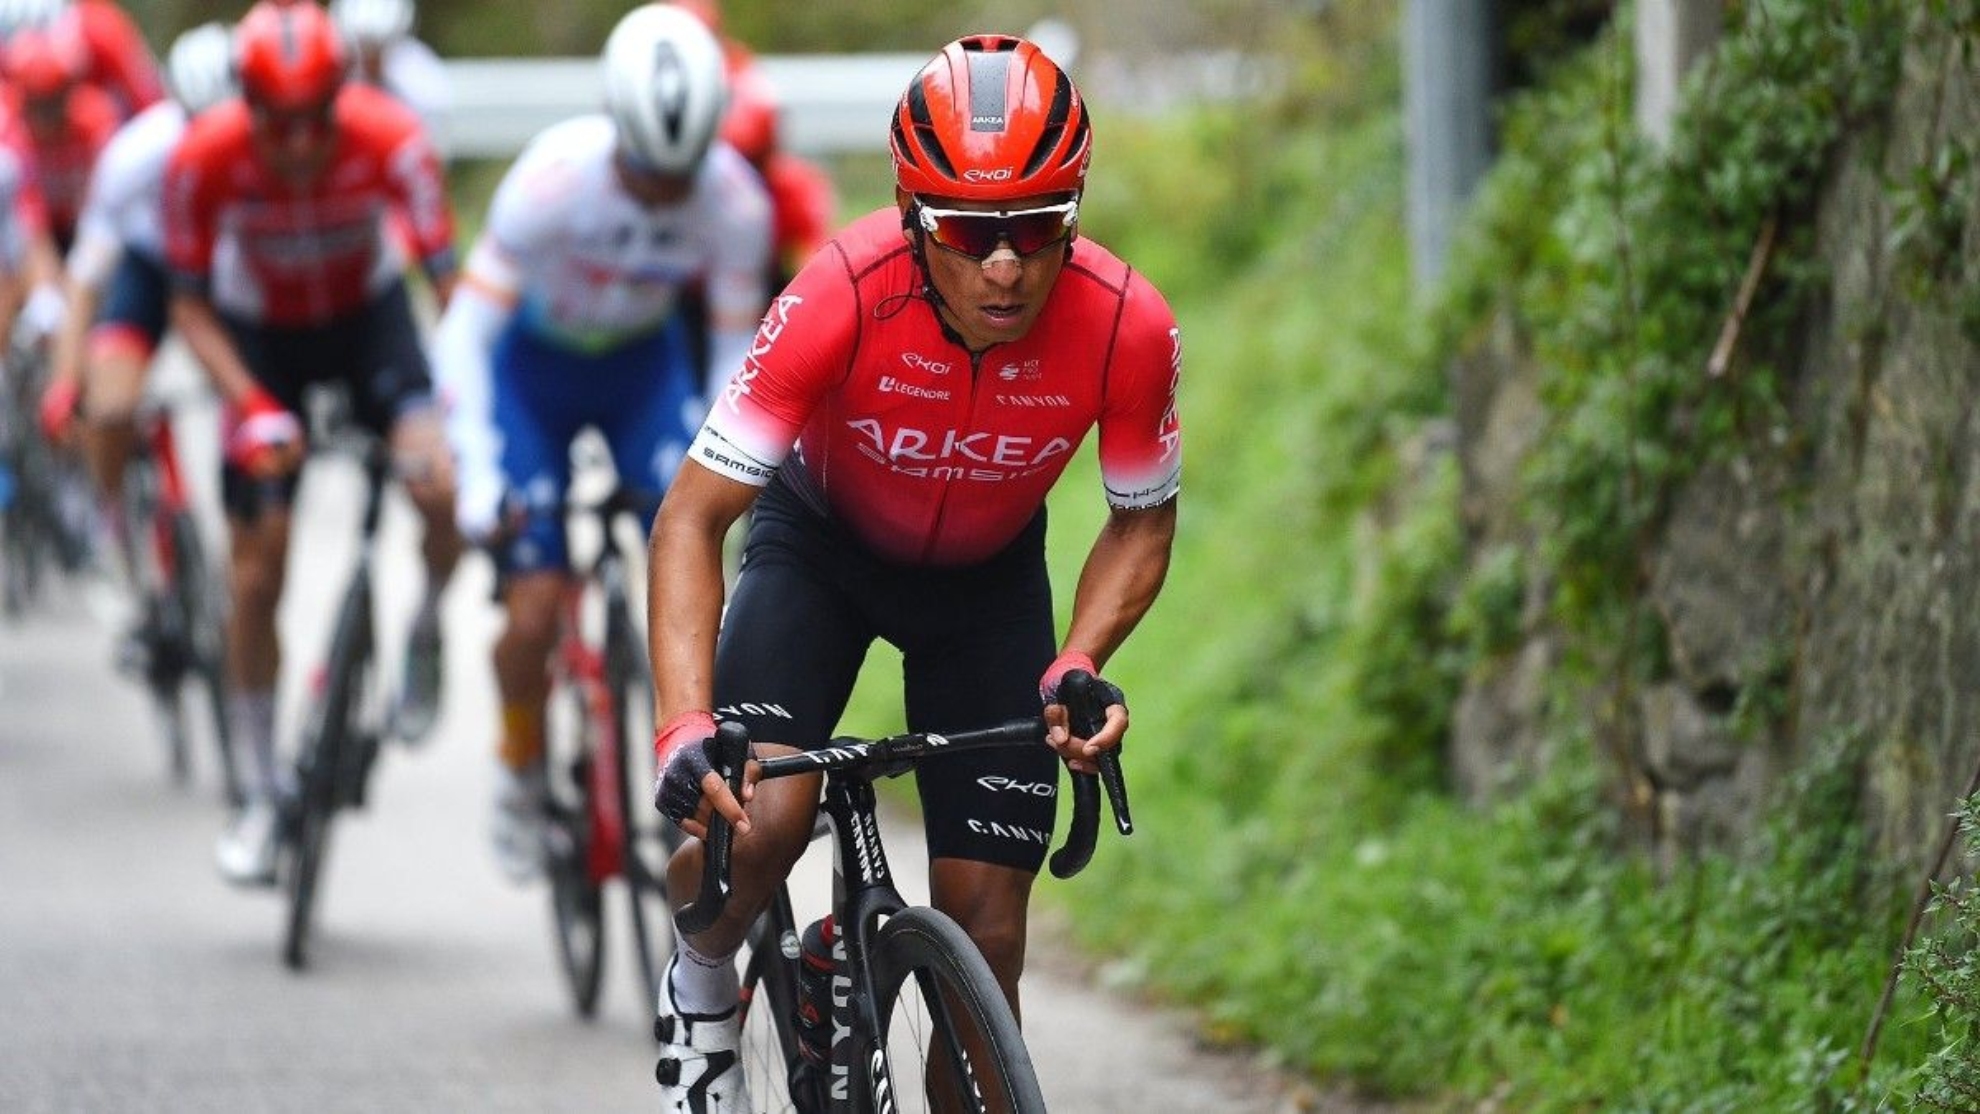 Ciclismo hoy: la hoja de ruta de Nairo Quintana hacia un Tour de Francia de incógnito